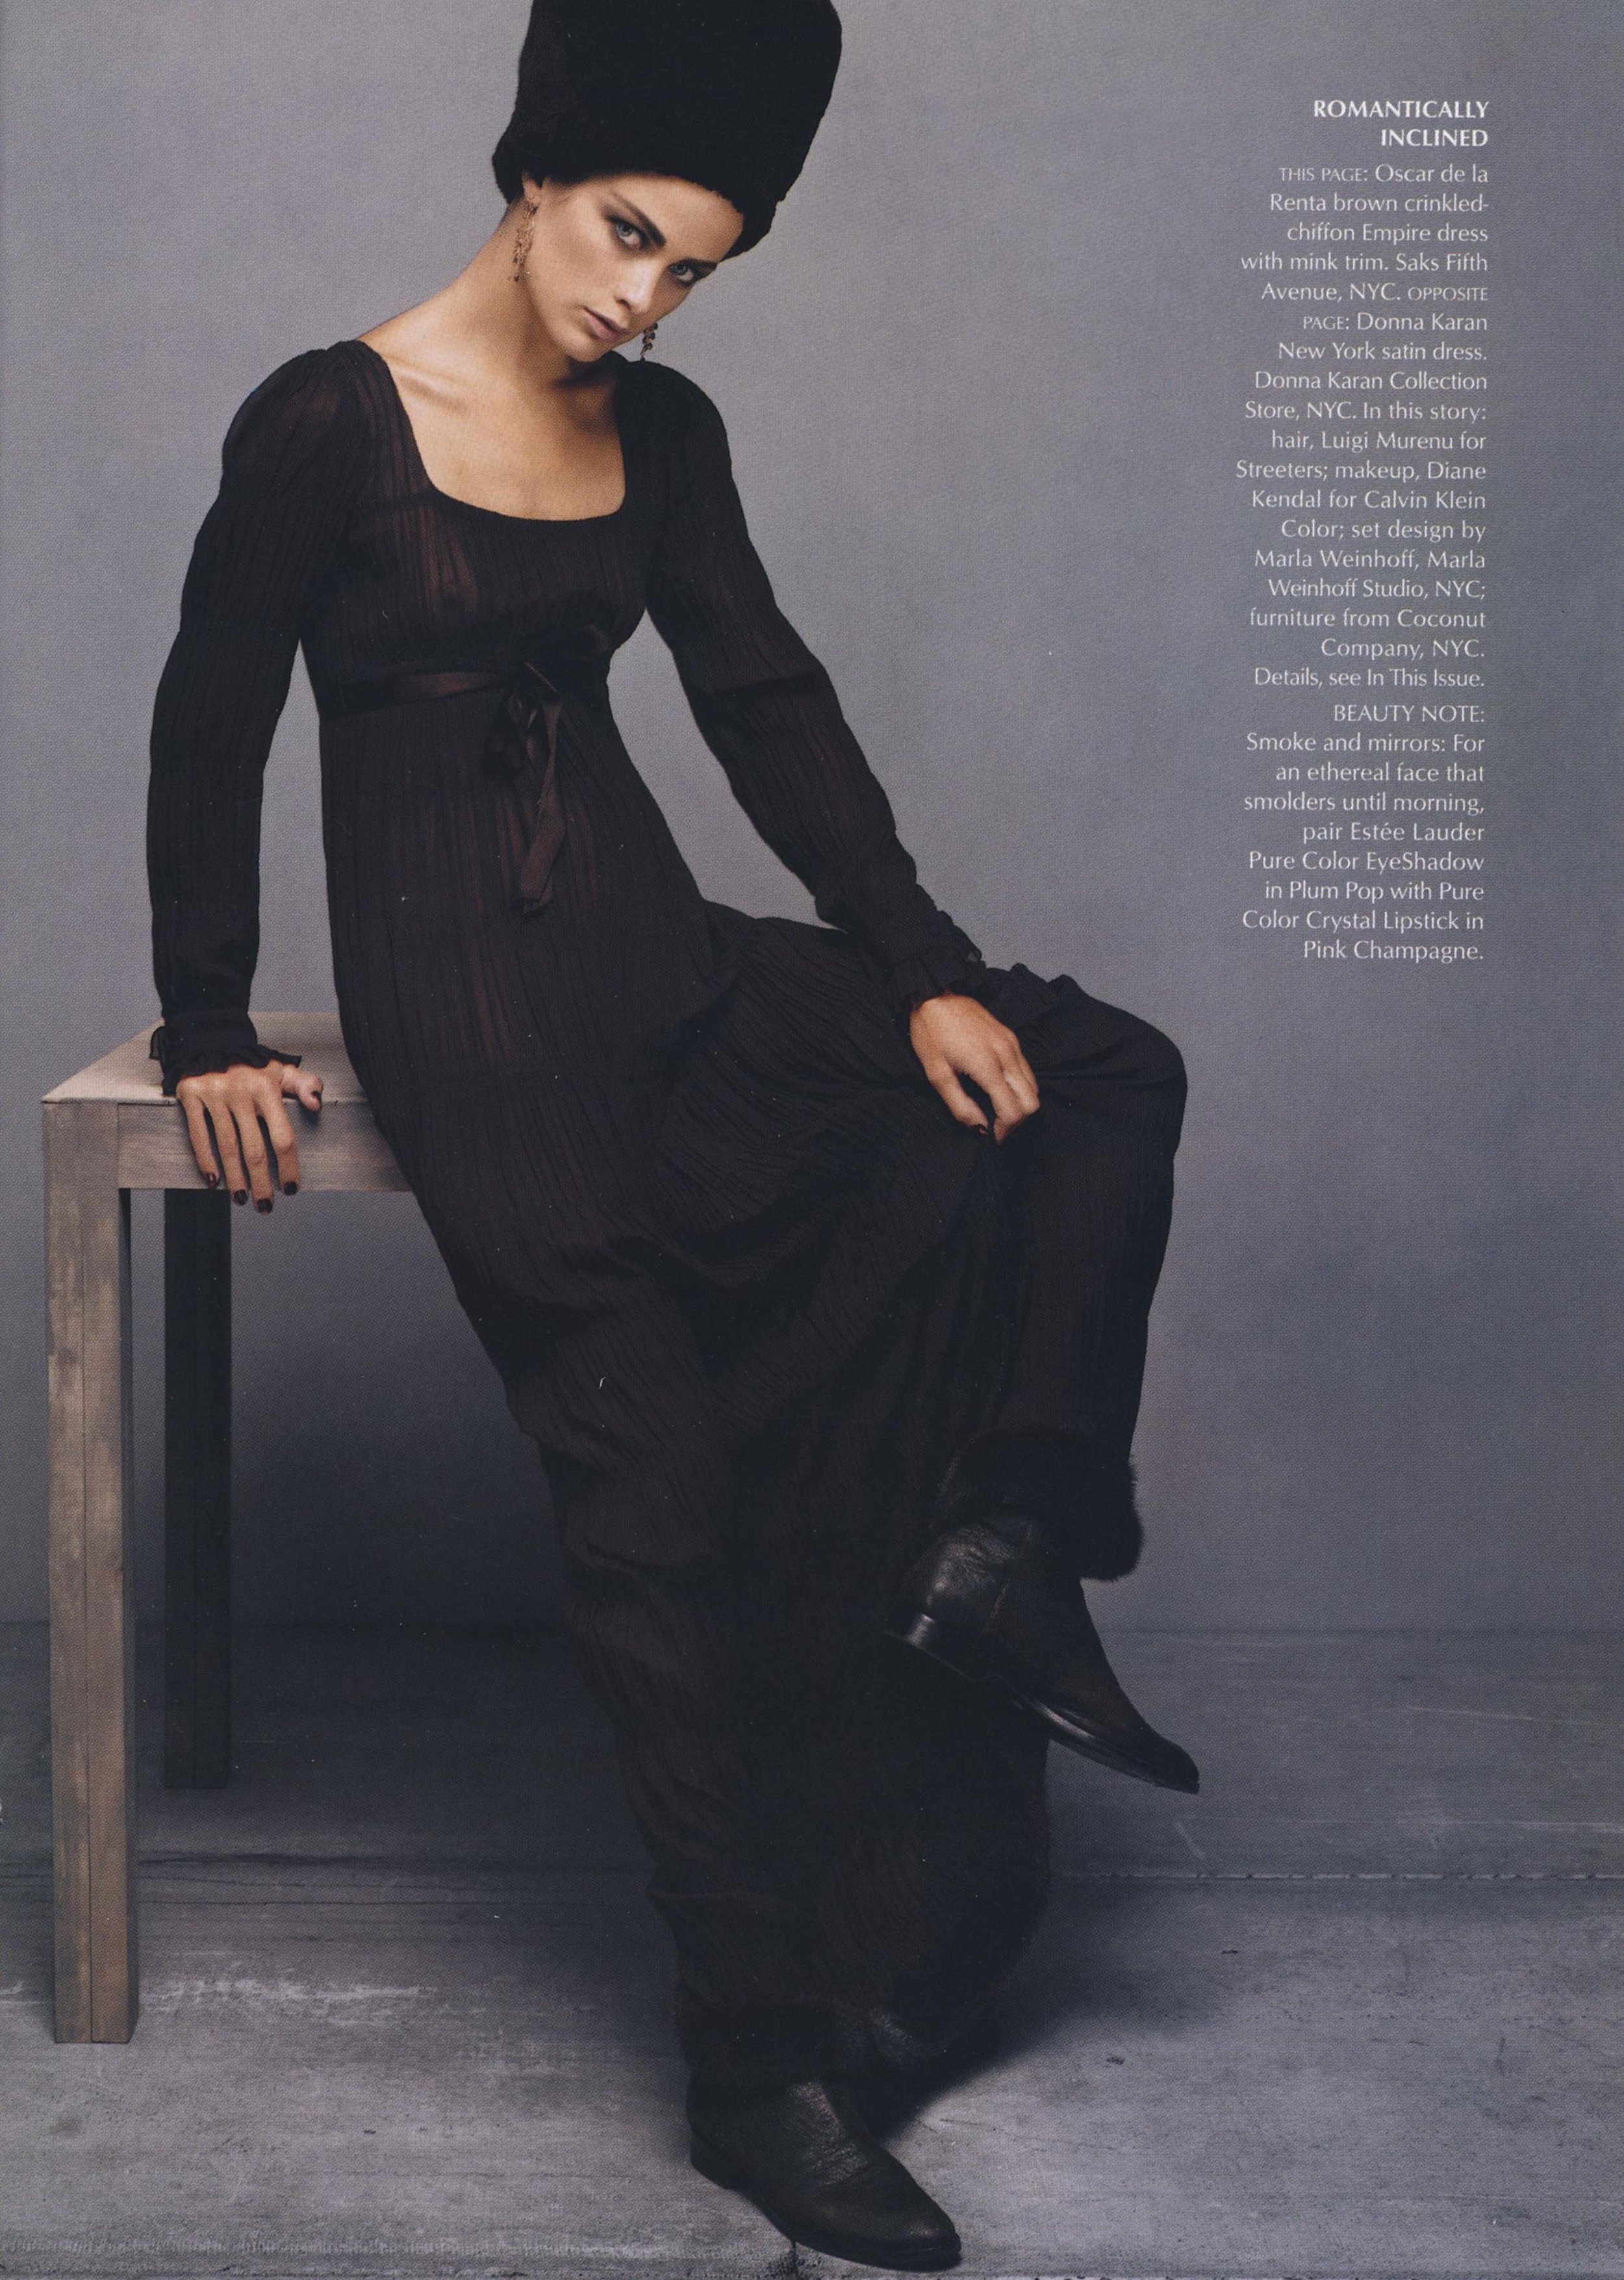 Carolyn-Murphy-by-Steven-Klein-Vogue-US-November-2002-5.jpeg